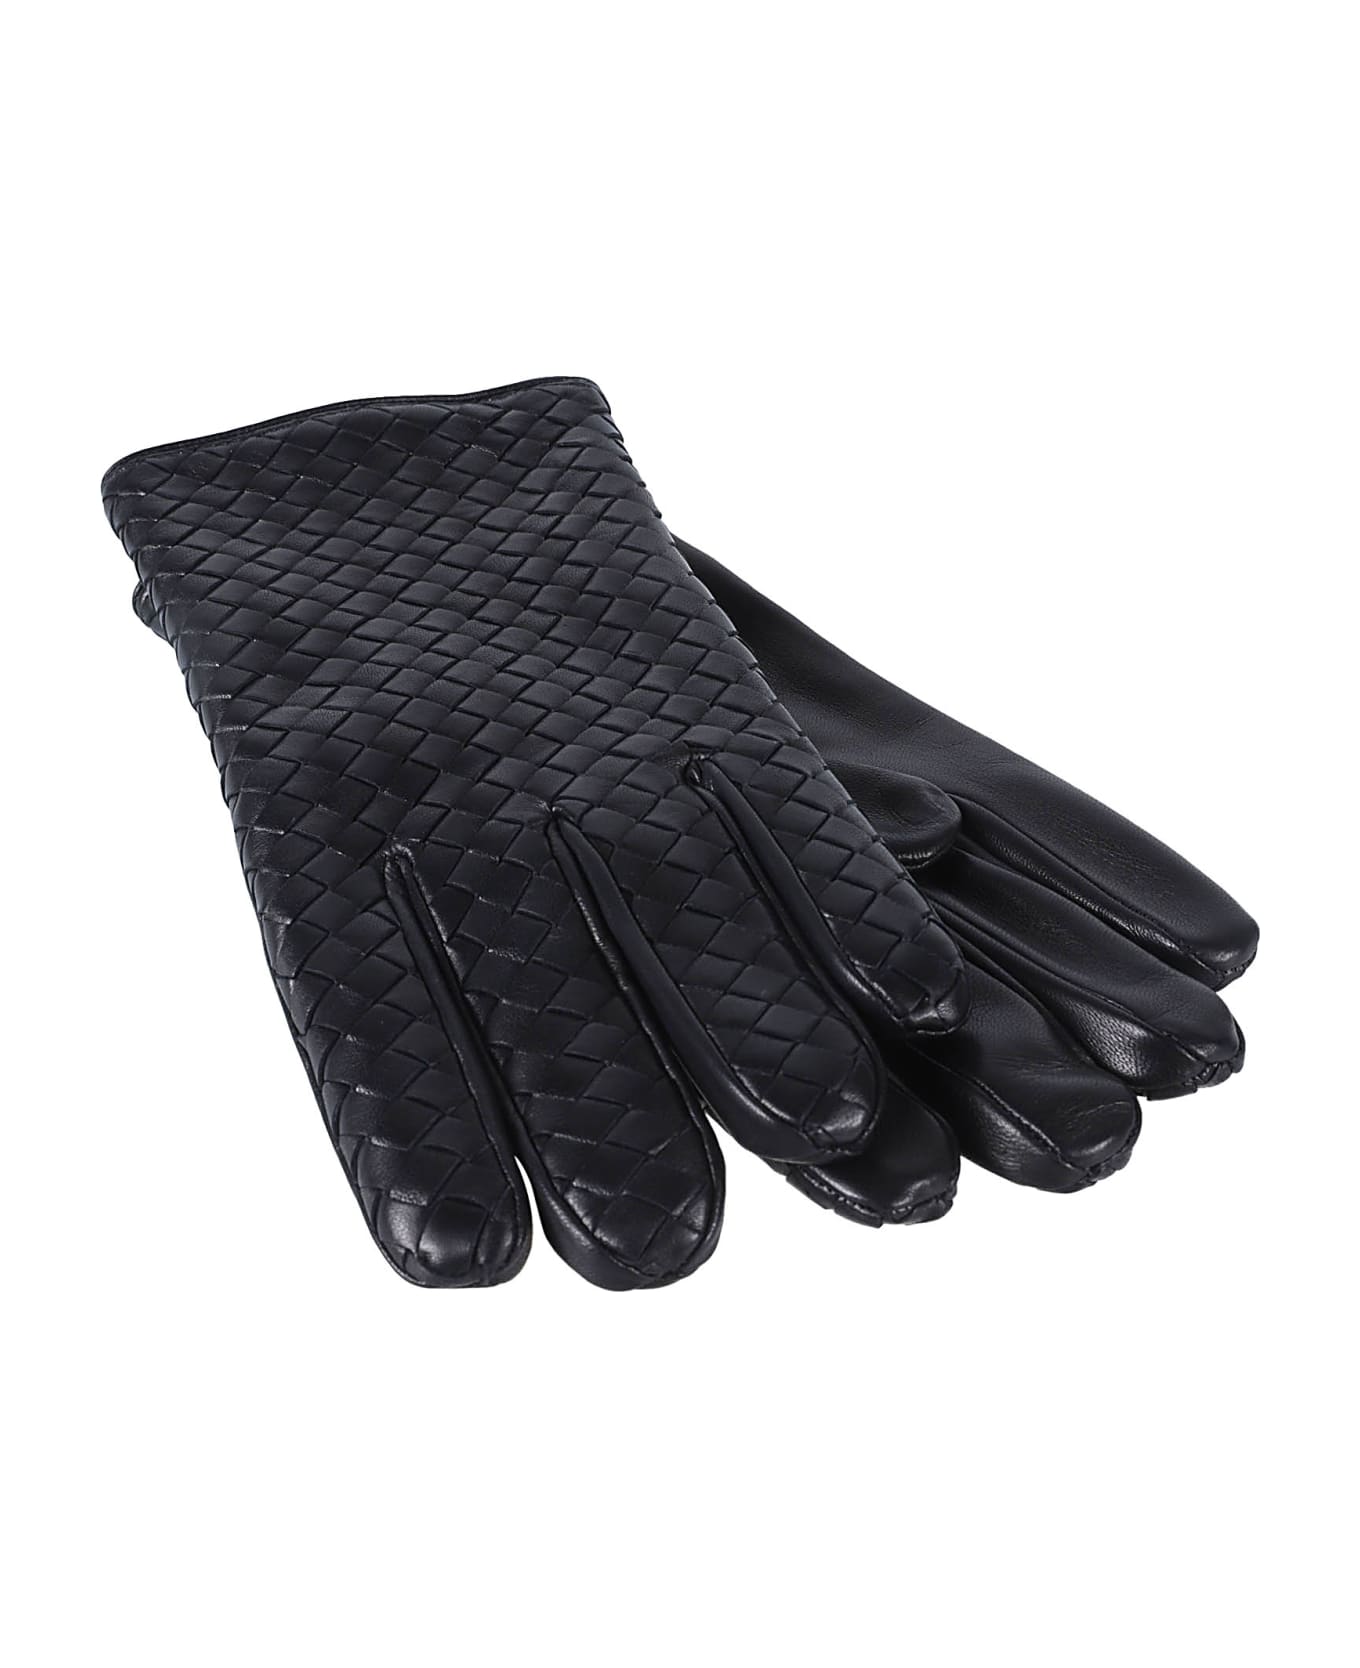 Bottega Veneta Gloves With Intreccio Motif In Smooth Leather 手袋